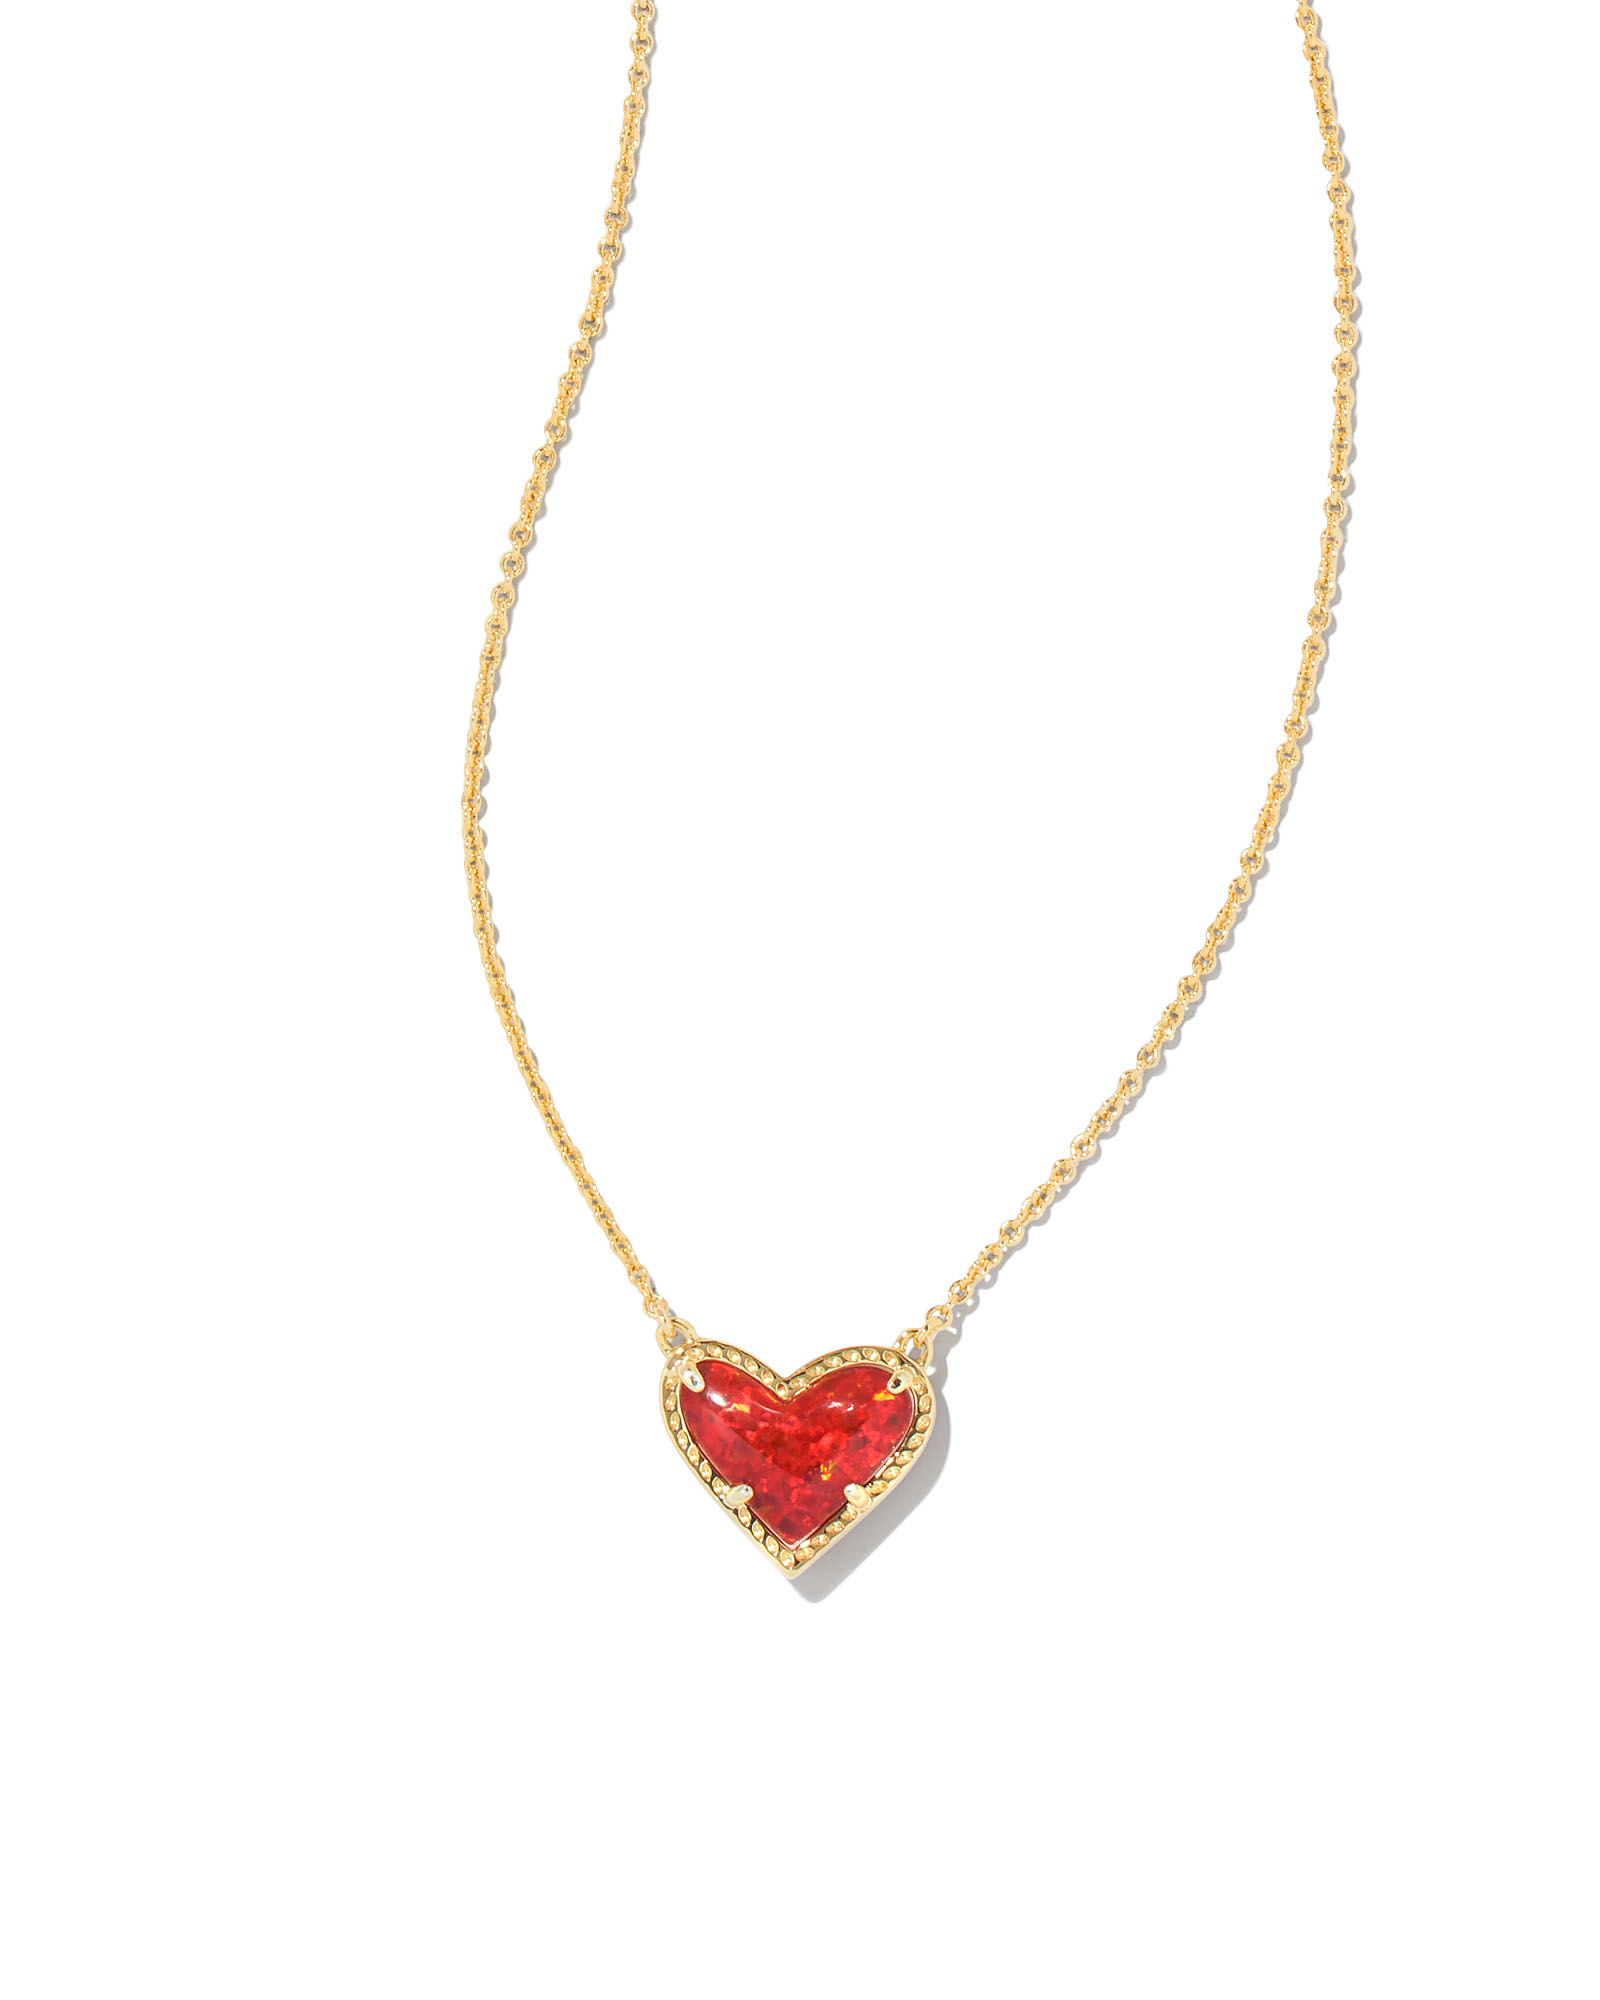 Ari Heart Gold Pendant Necklace in Red Kyocera Opal | Kendra Scott